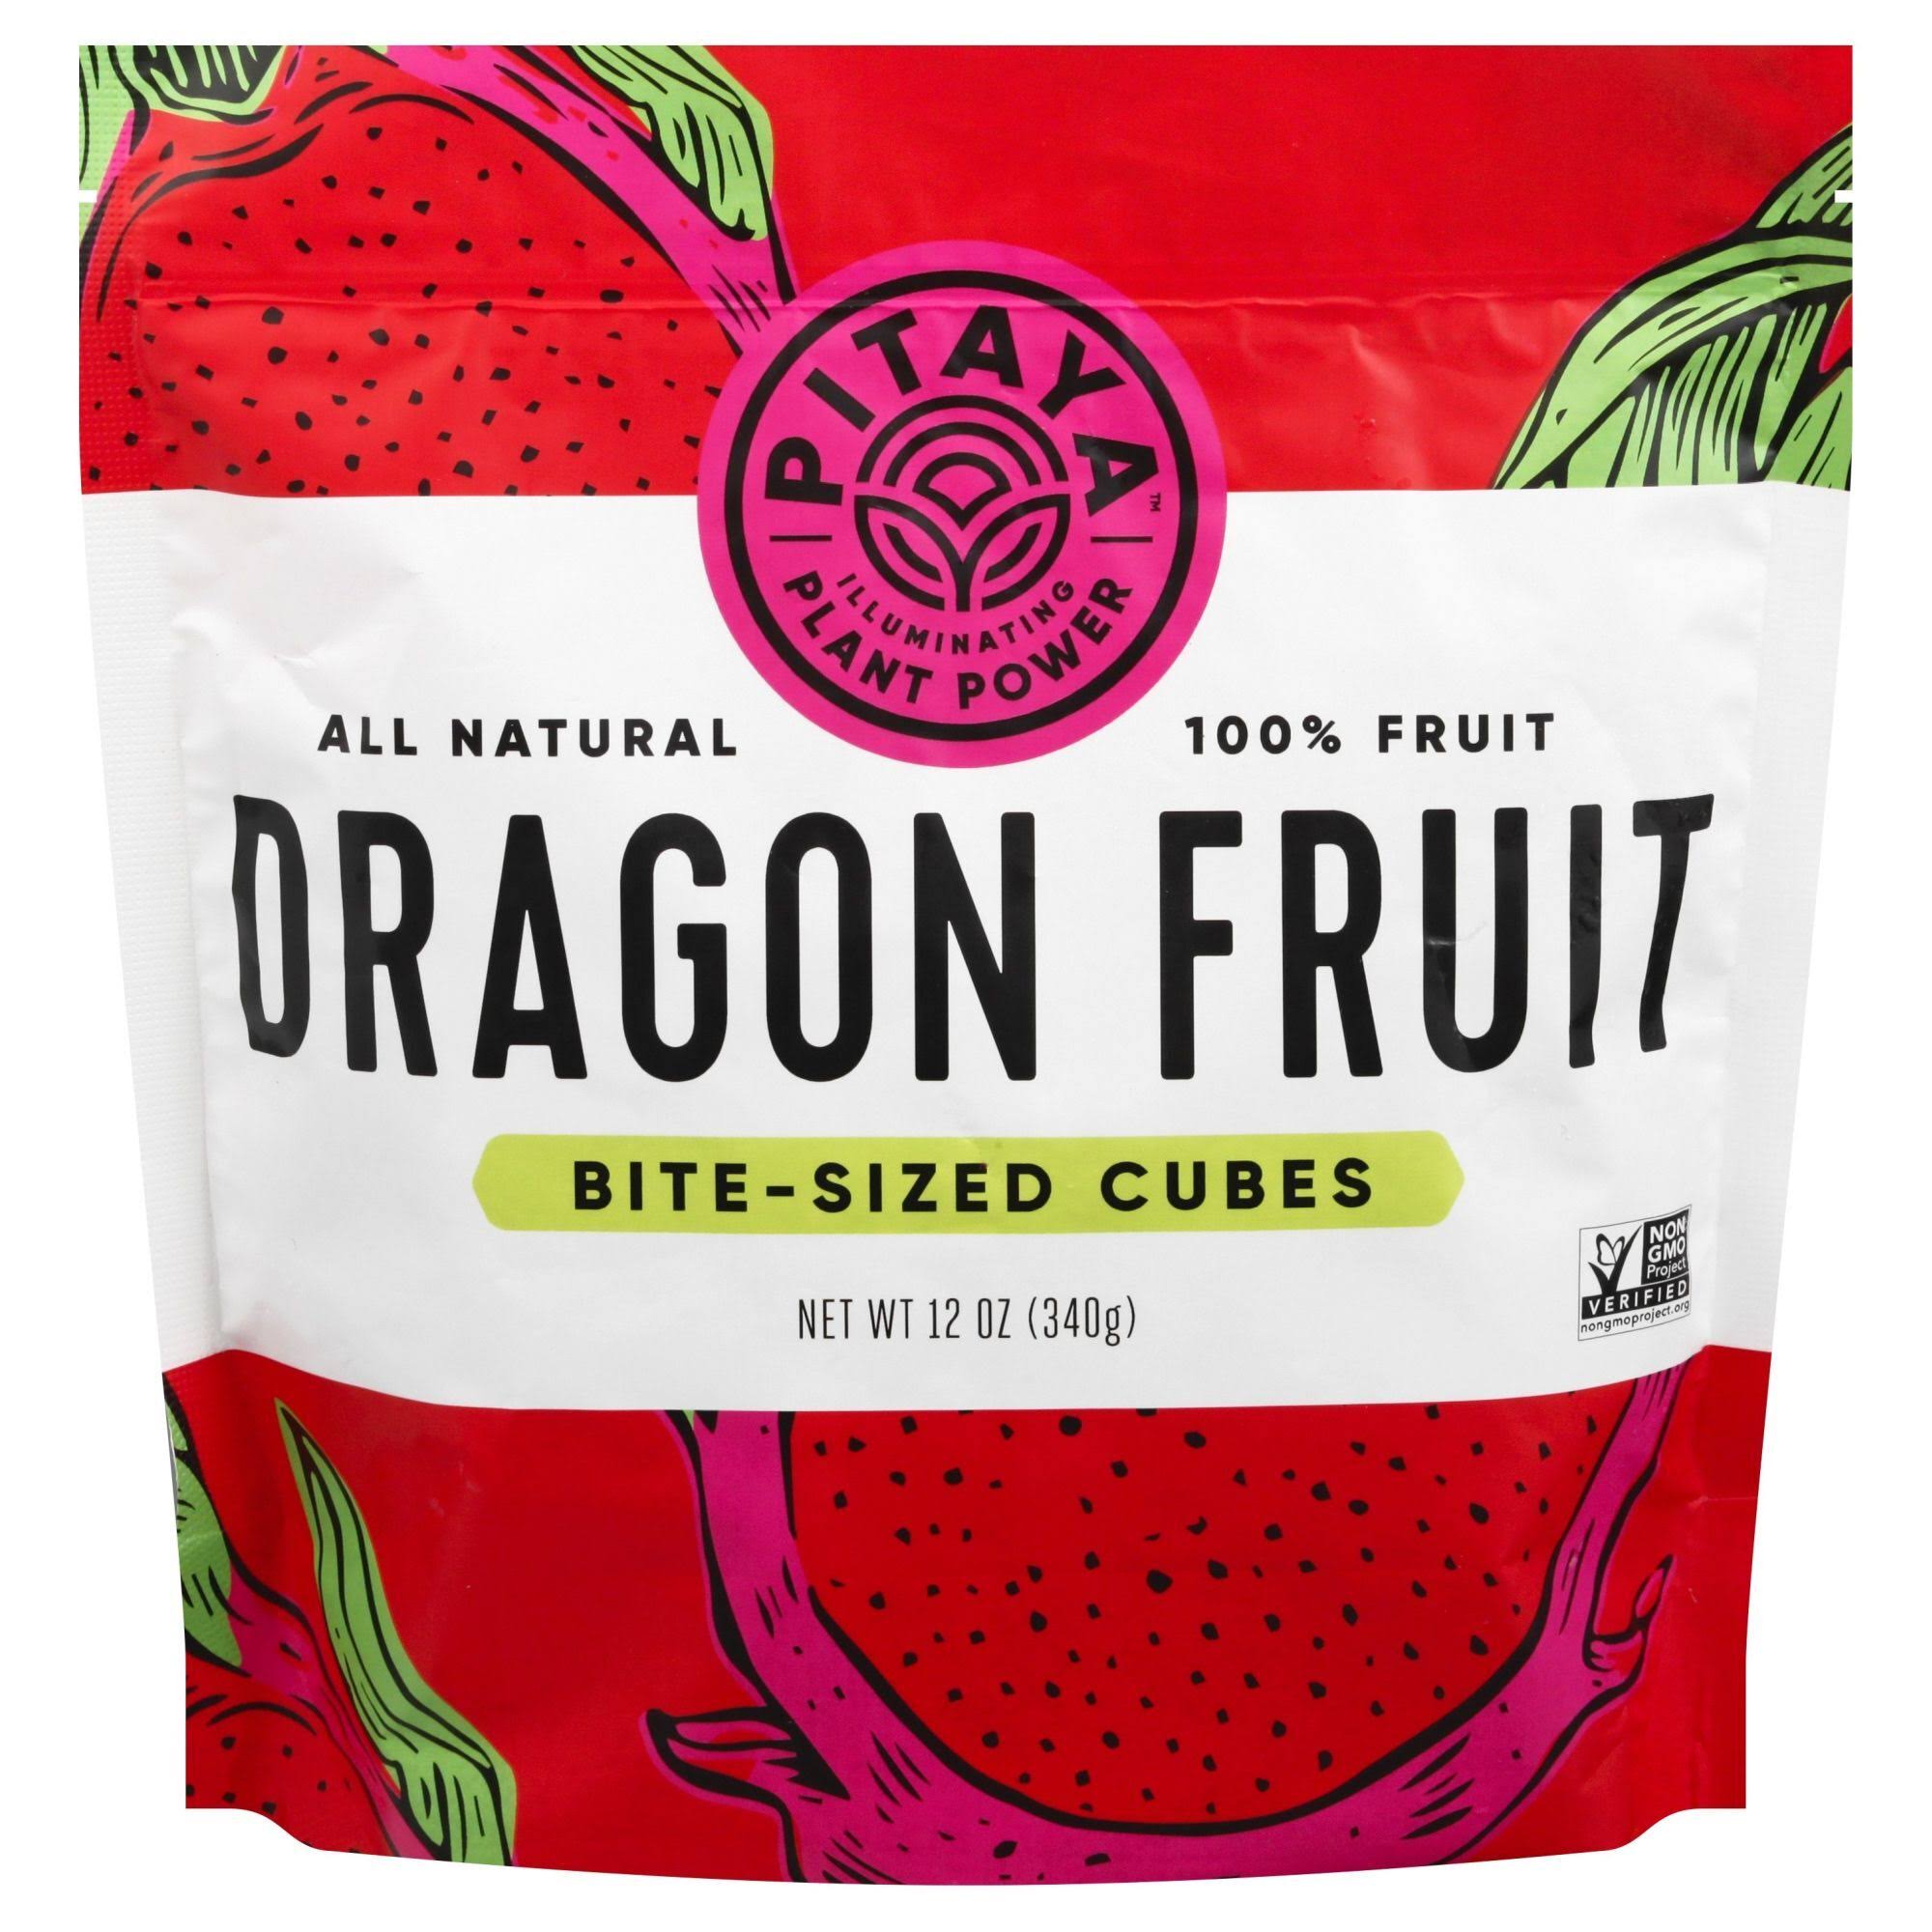 Pitaya Dragon Fruit, Bite Size Cubes - 12 oz